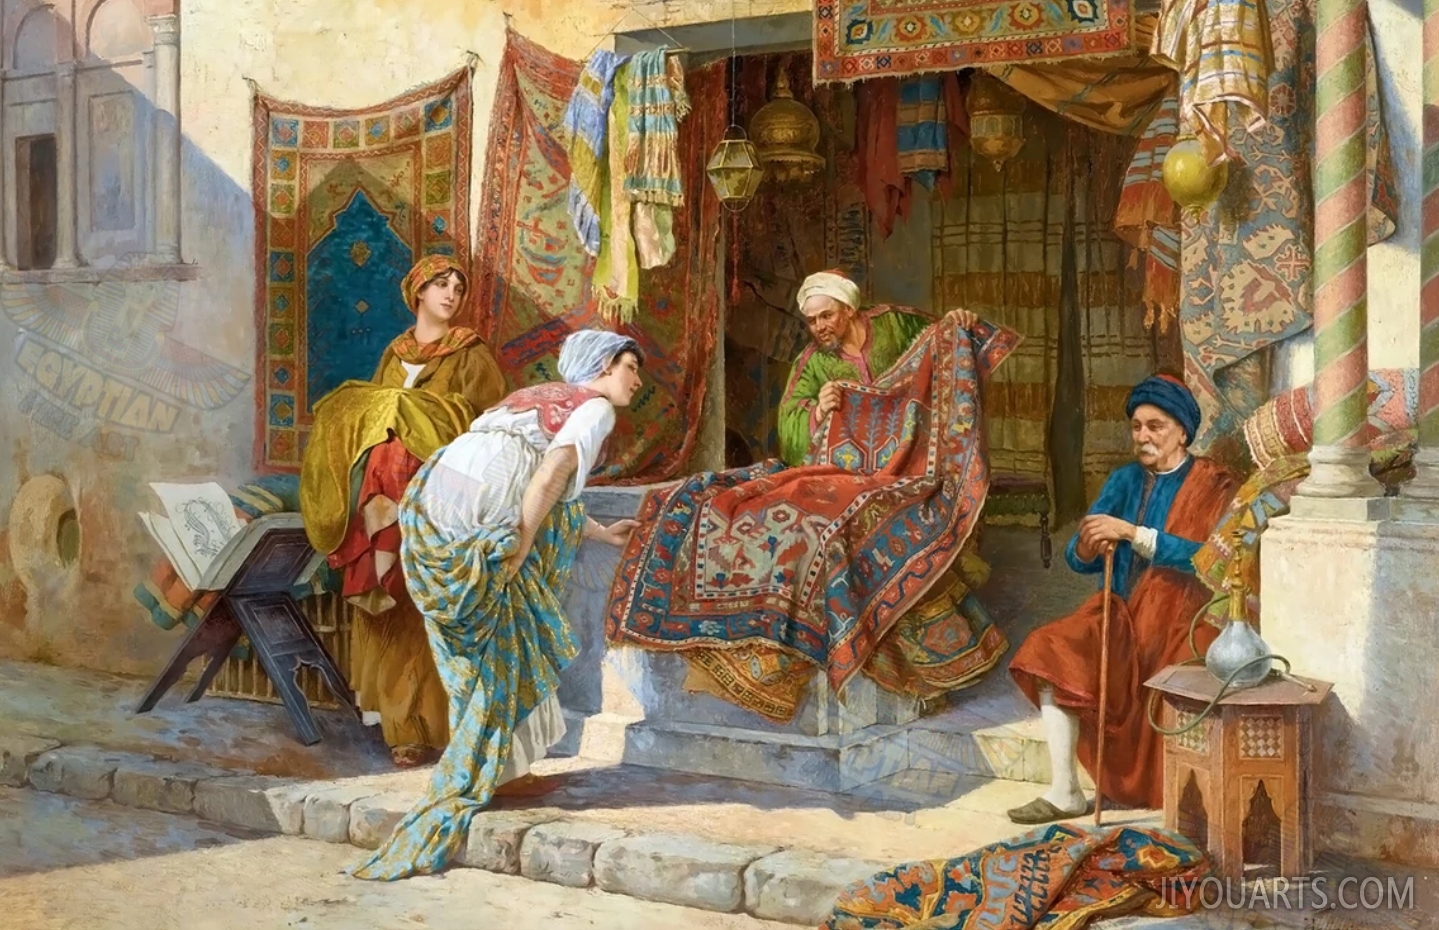 Hand Painted Artwork   The Carpet Merchant And The Arab Lady   Arabic Art   Islamic Art